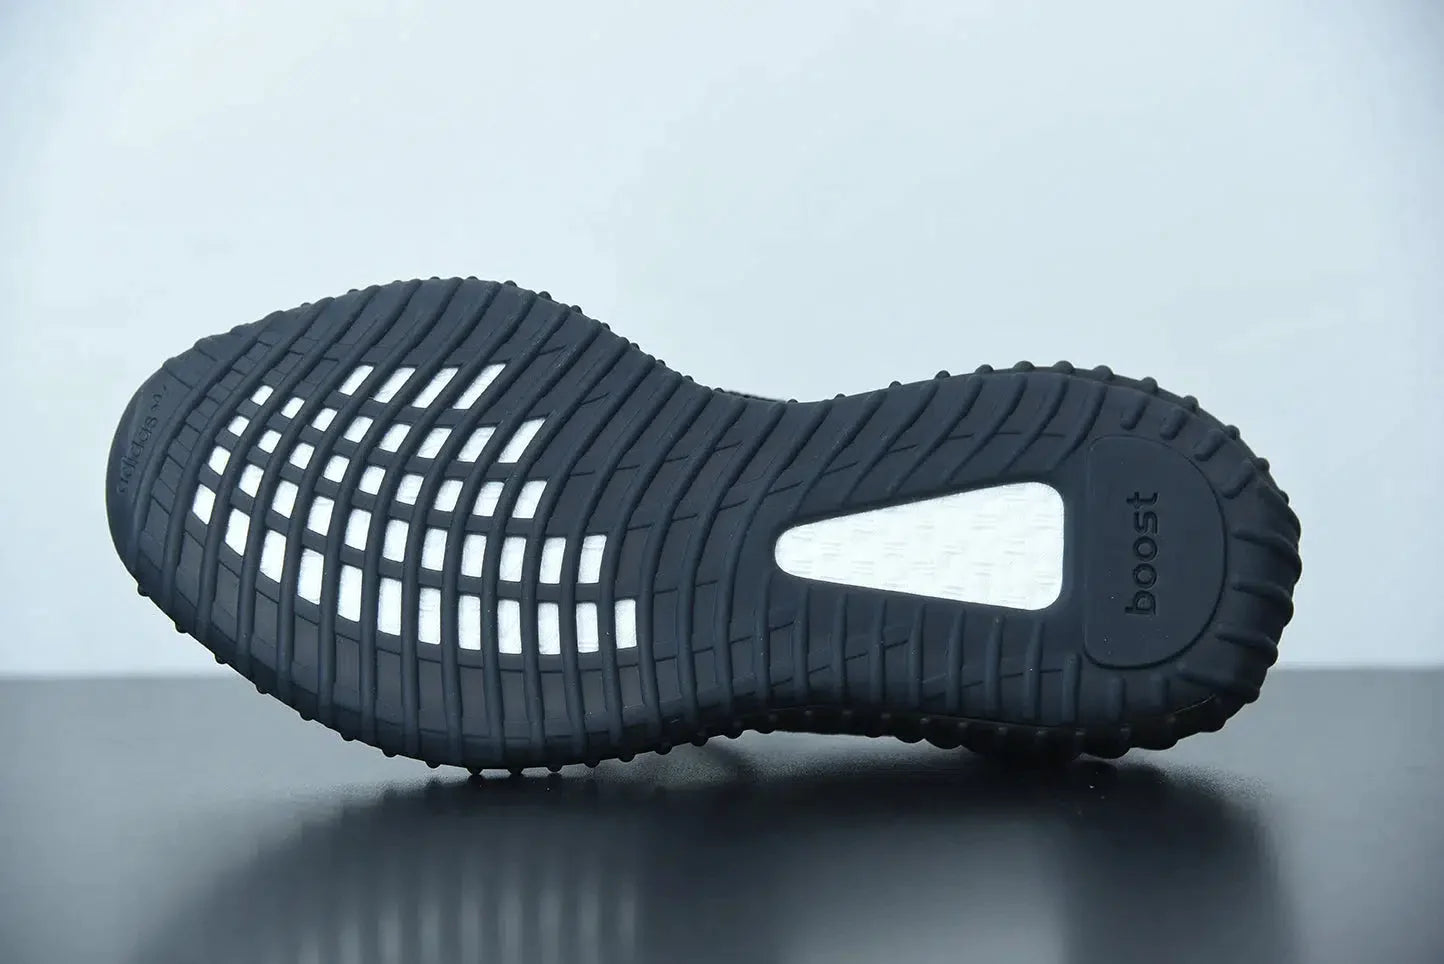 REP VERSION: Static Black Reflective Yeezy Boost 350 V2-Running Shoes-KicksOnDeck